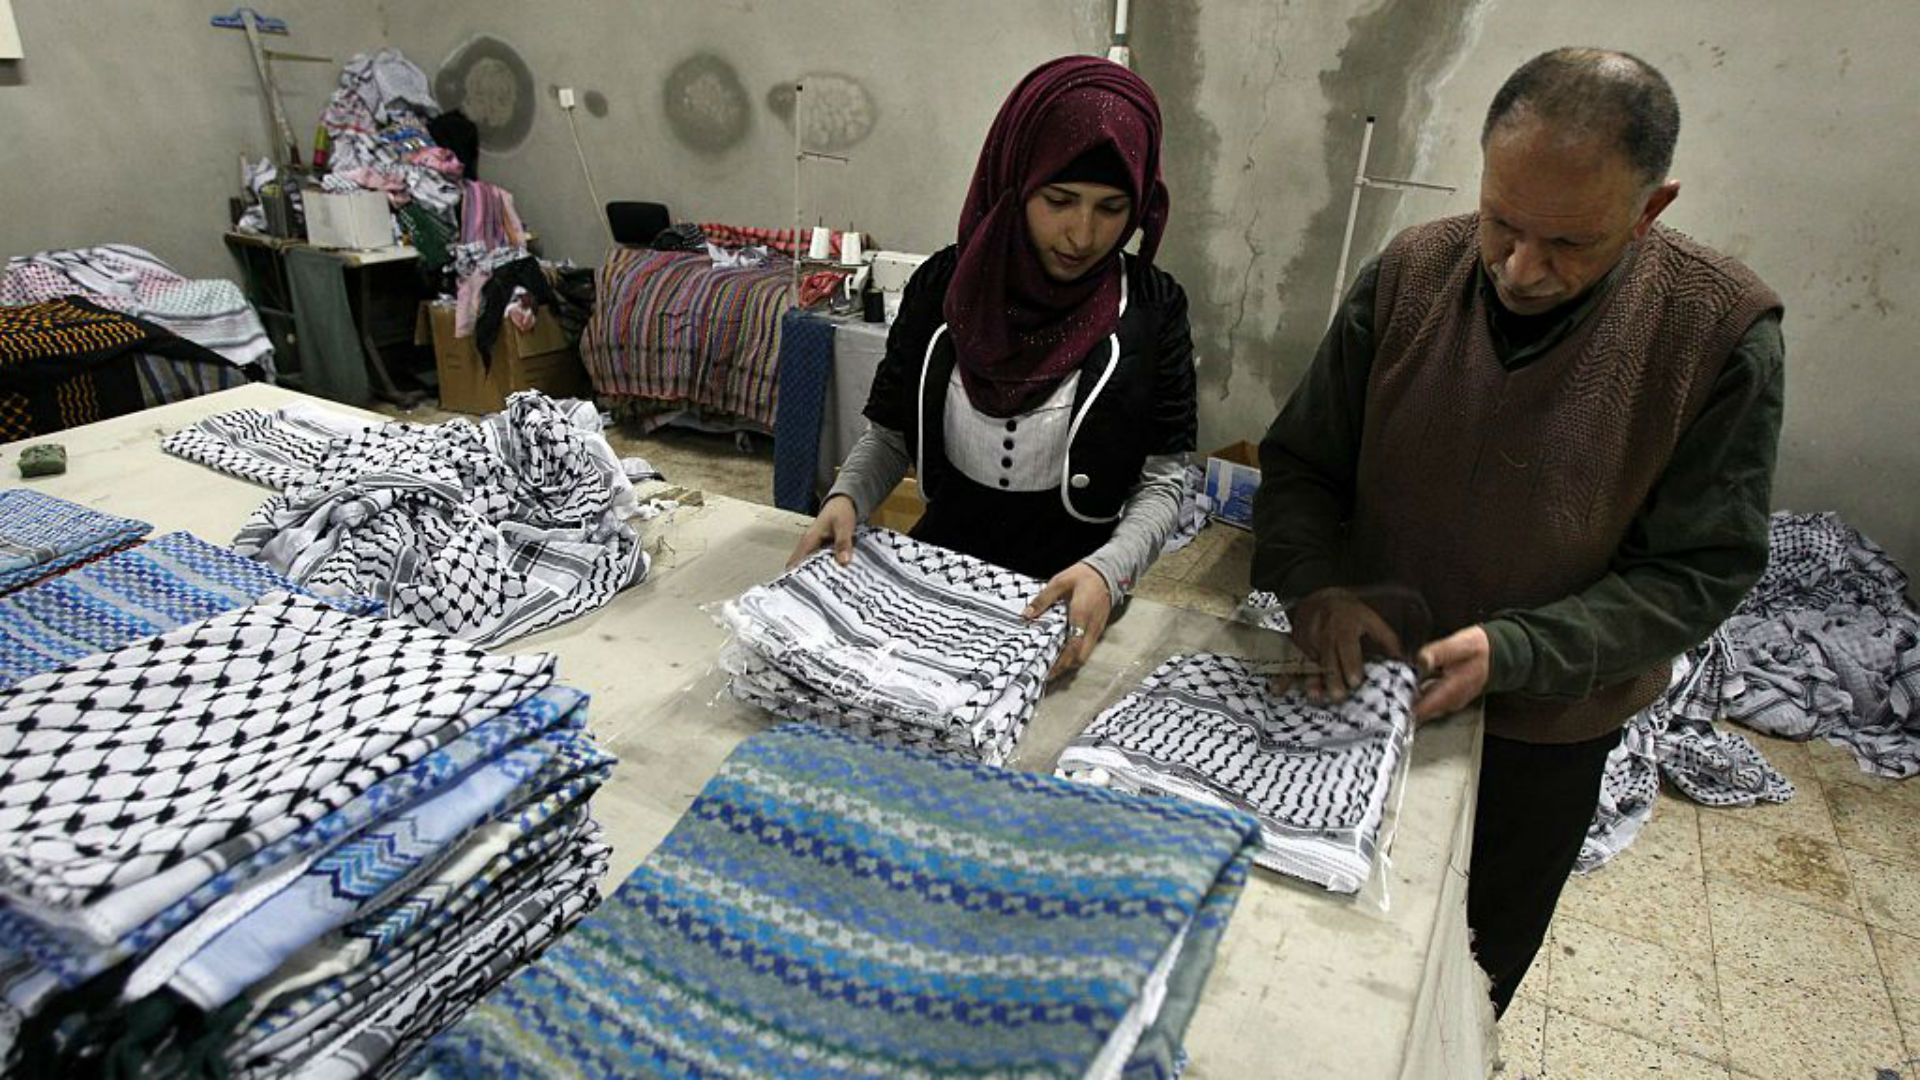 Young man wearing a palestinian keffiyeh scarf